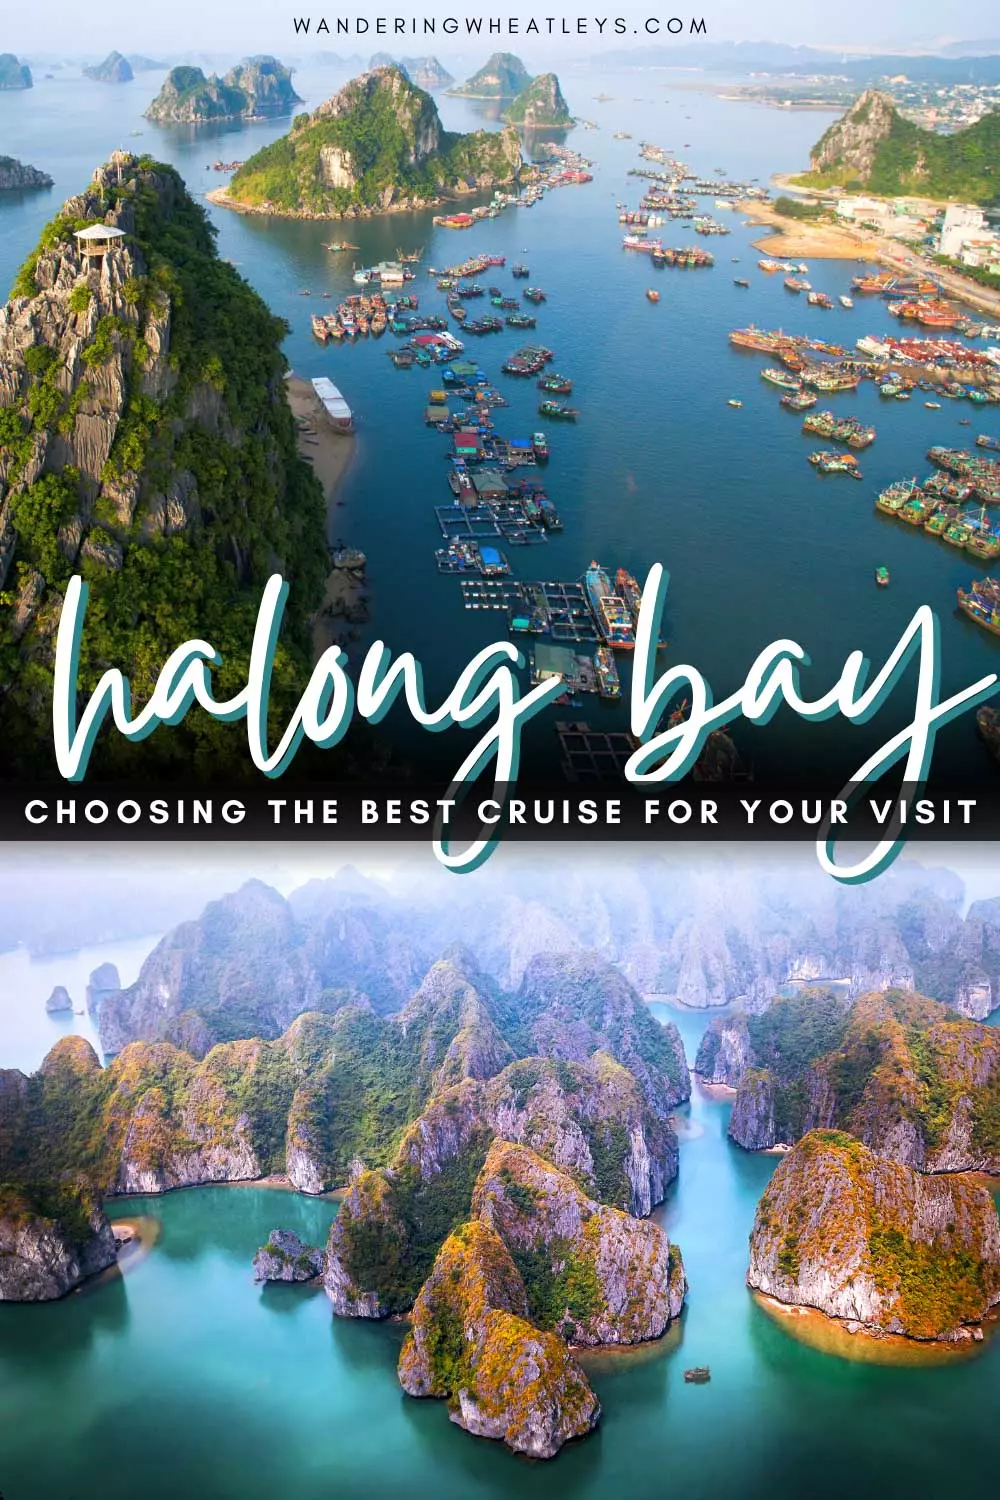 Choose the Best Halong Bay Cruise: Sunset